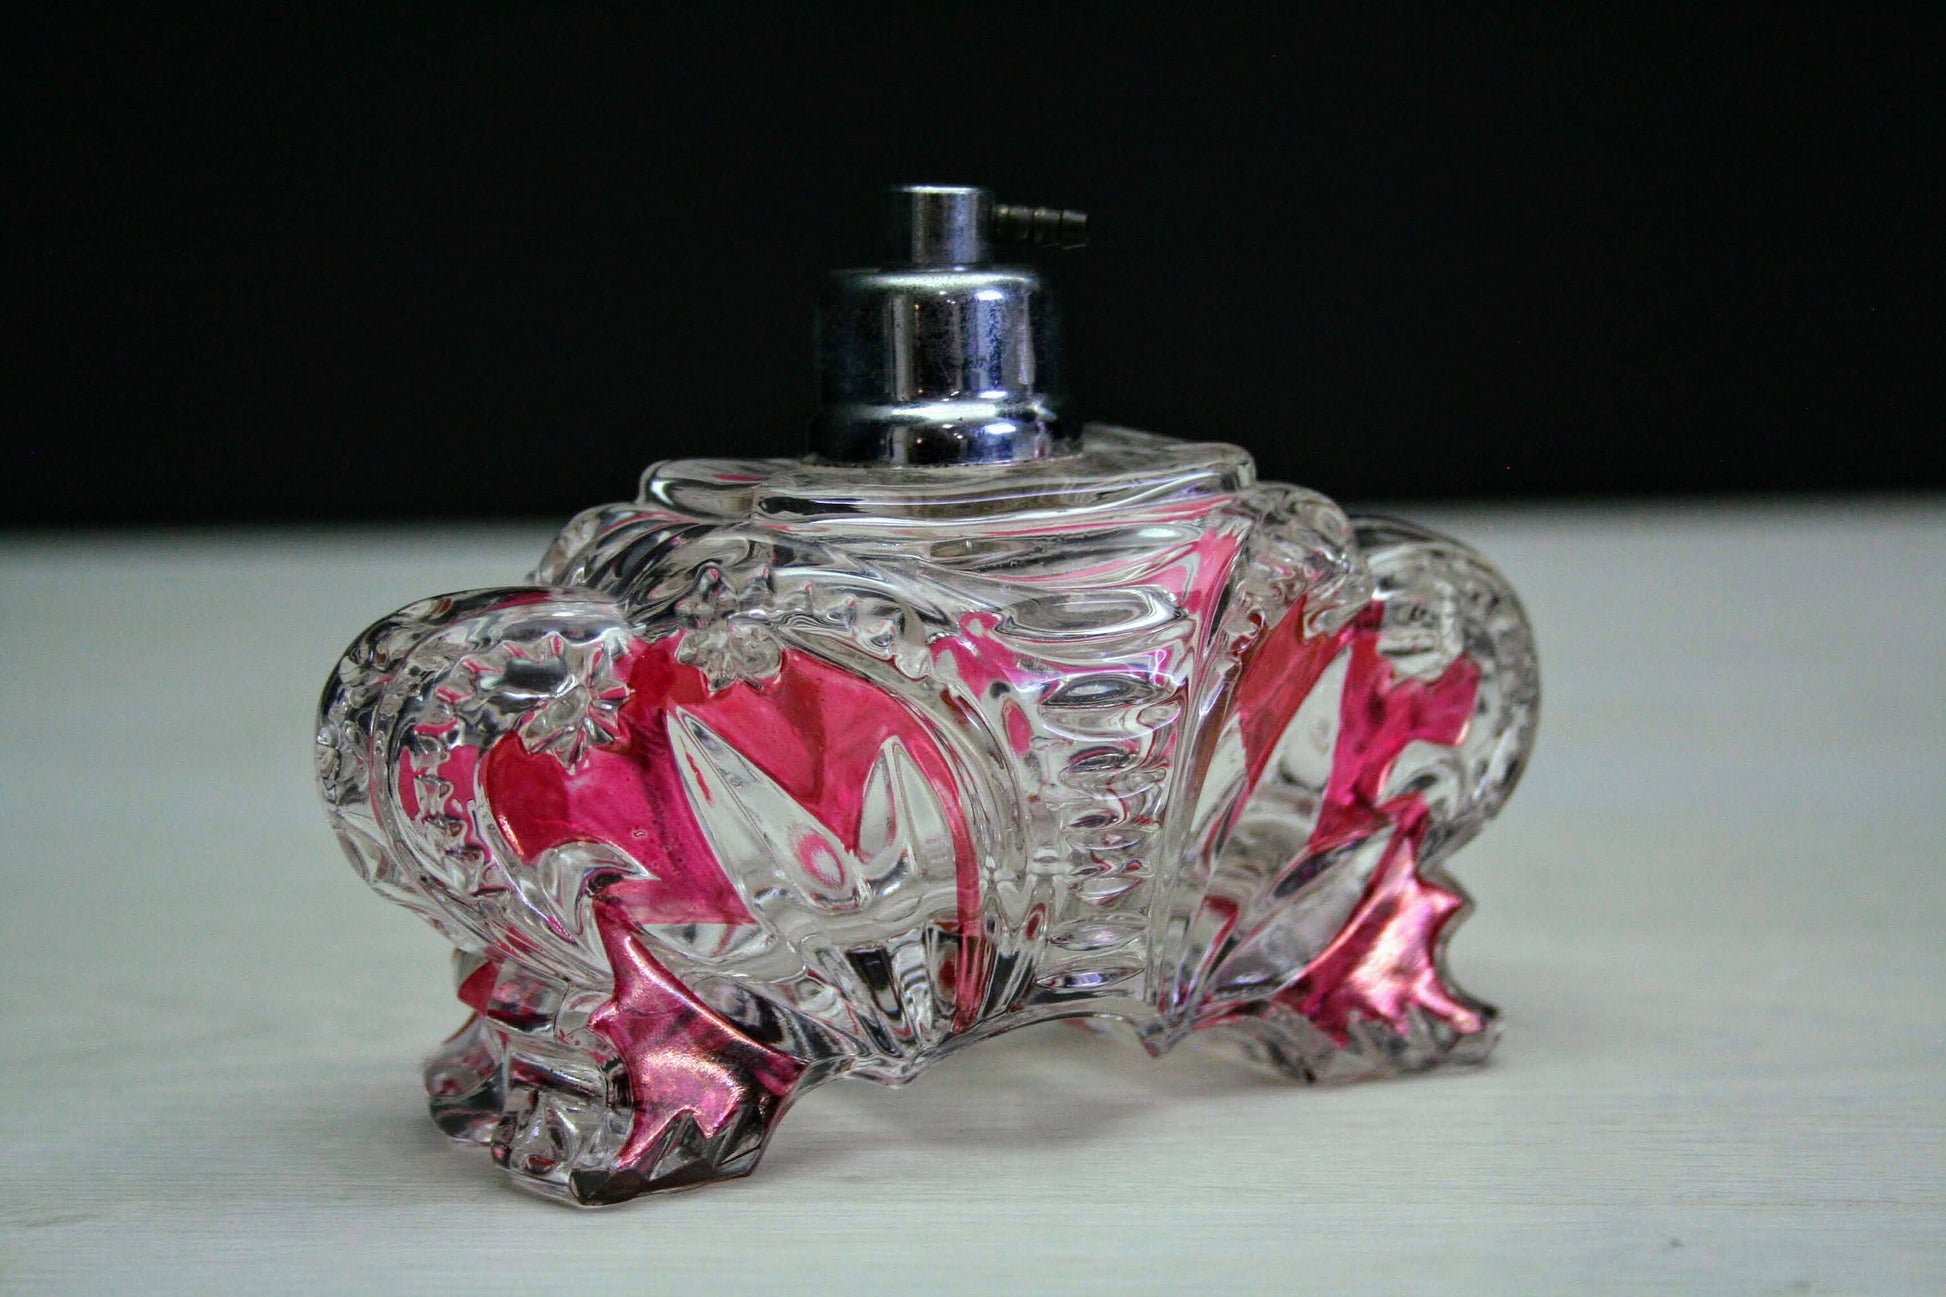 European-Antique Vanity Set-Perfume Bottle-Glass Jewelry Box-Unique Gift Ideas-Jewelry Storage-Perfume Atomizer-Vintage Home Decor-Antique